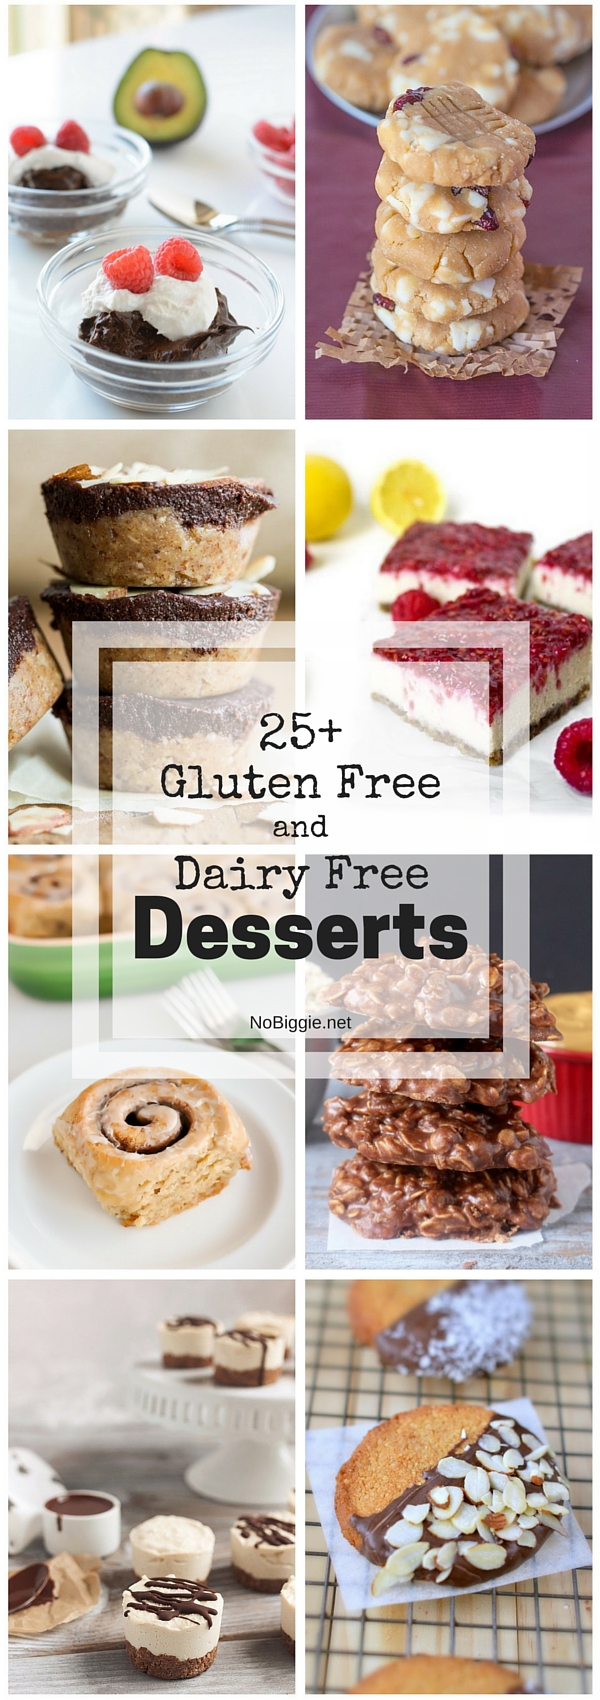 25+ Gluten Free And Dairy Free Desserts